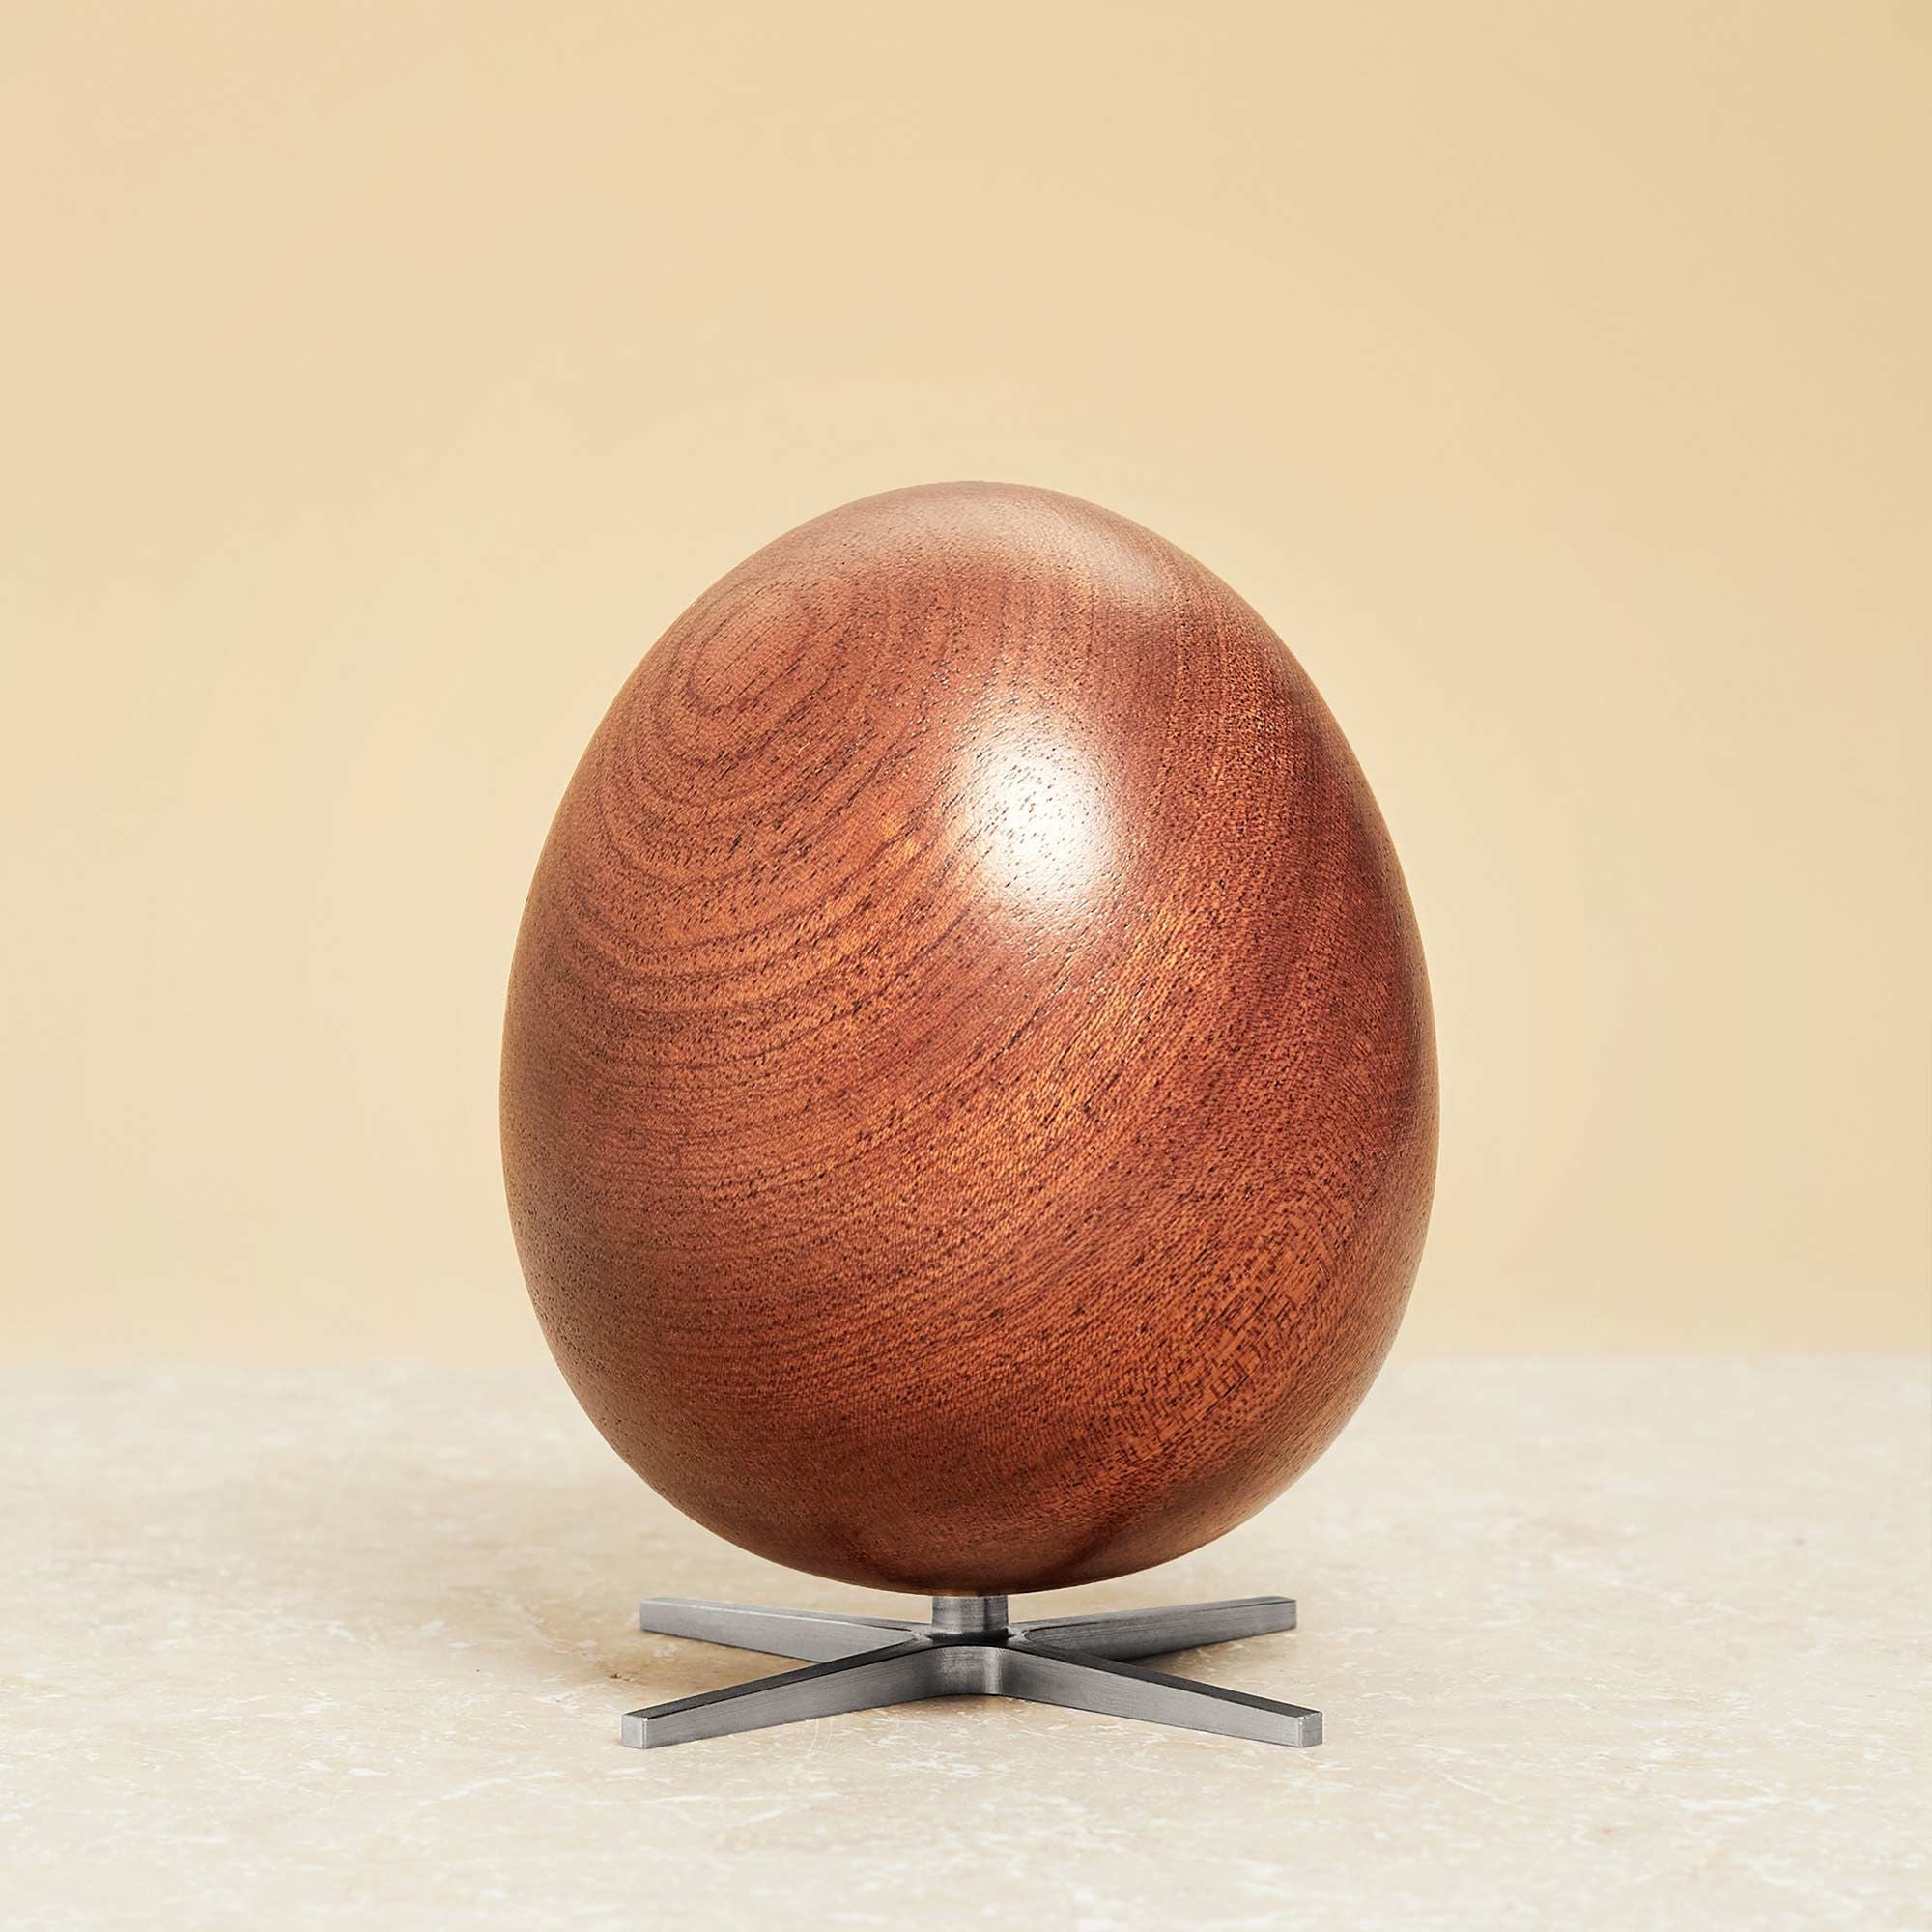 Brainchild the uovo in legno in mogano, base in acciaio